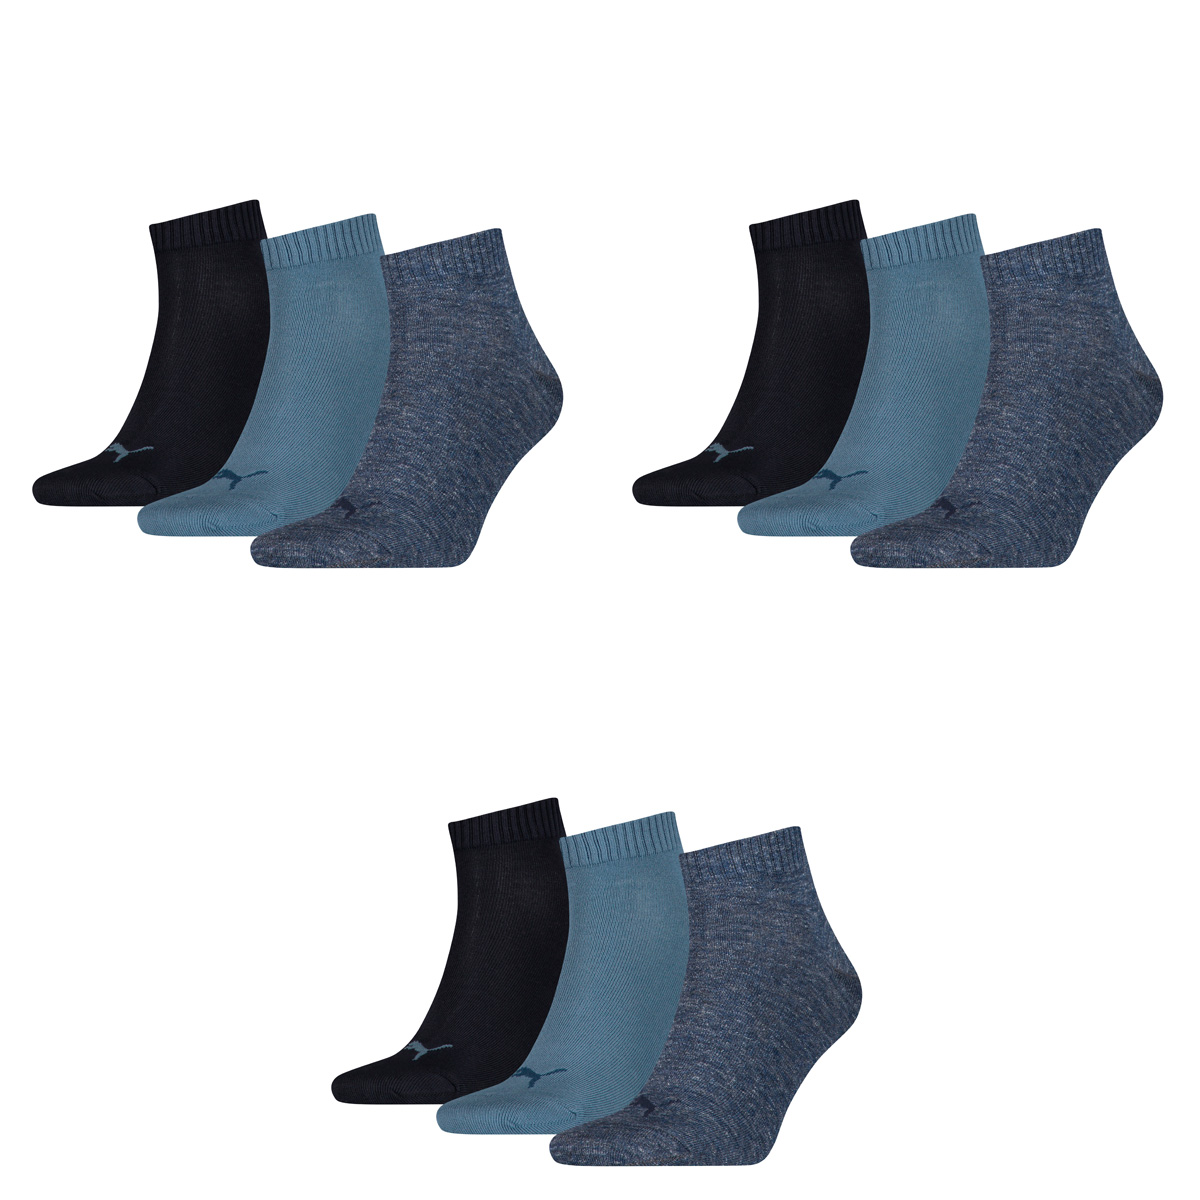 Puma 6 Paar Unisex Quarter Socken Sneaker Gr. 35-49 für Damen Herren Füßlinge, Socken & Strümpfe:47-49, Farbe:460 denim blue